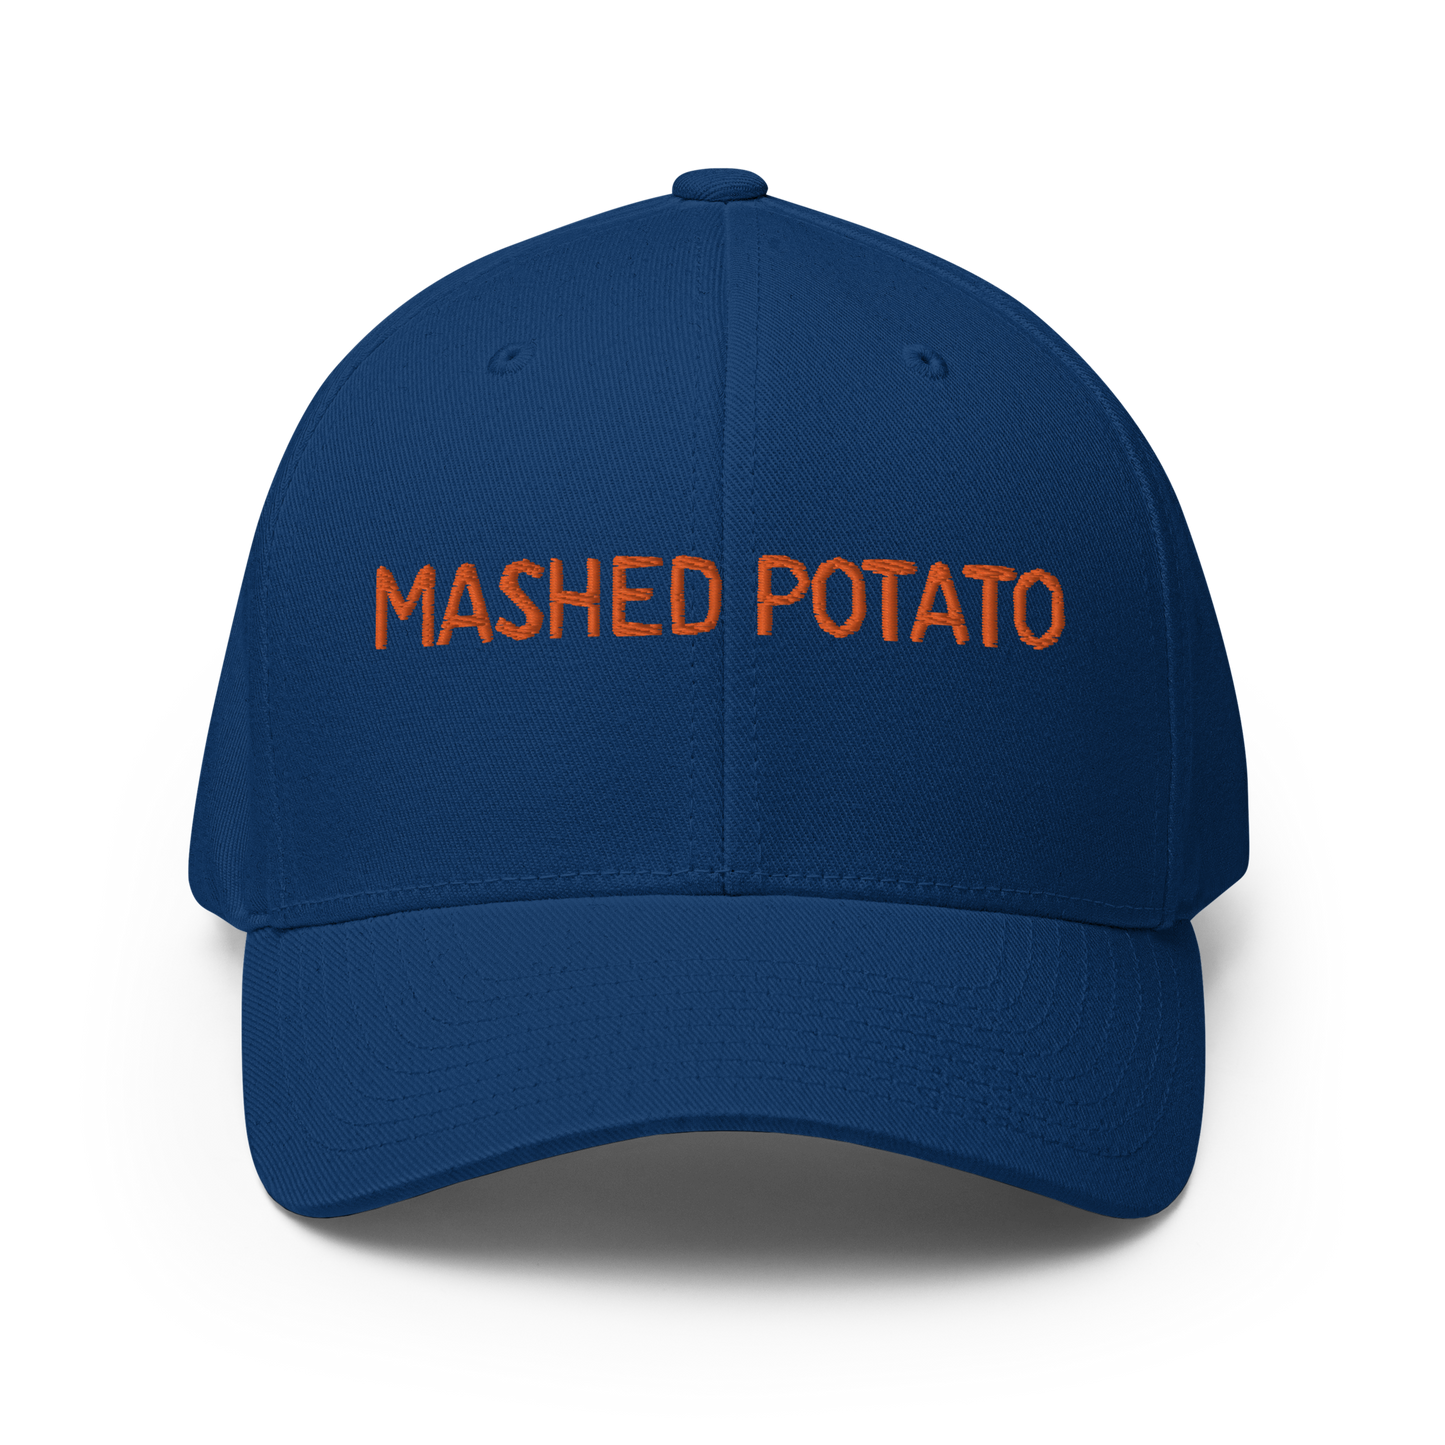 THE "MASHED POTATO" BASEBALL CAP